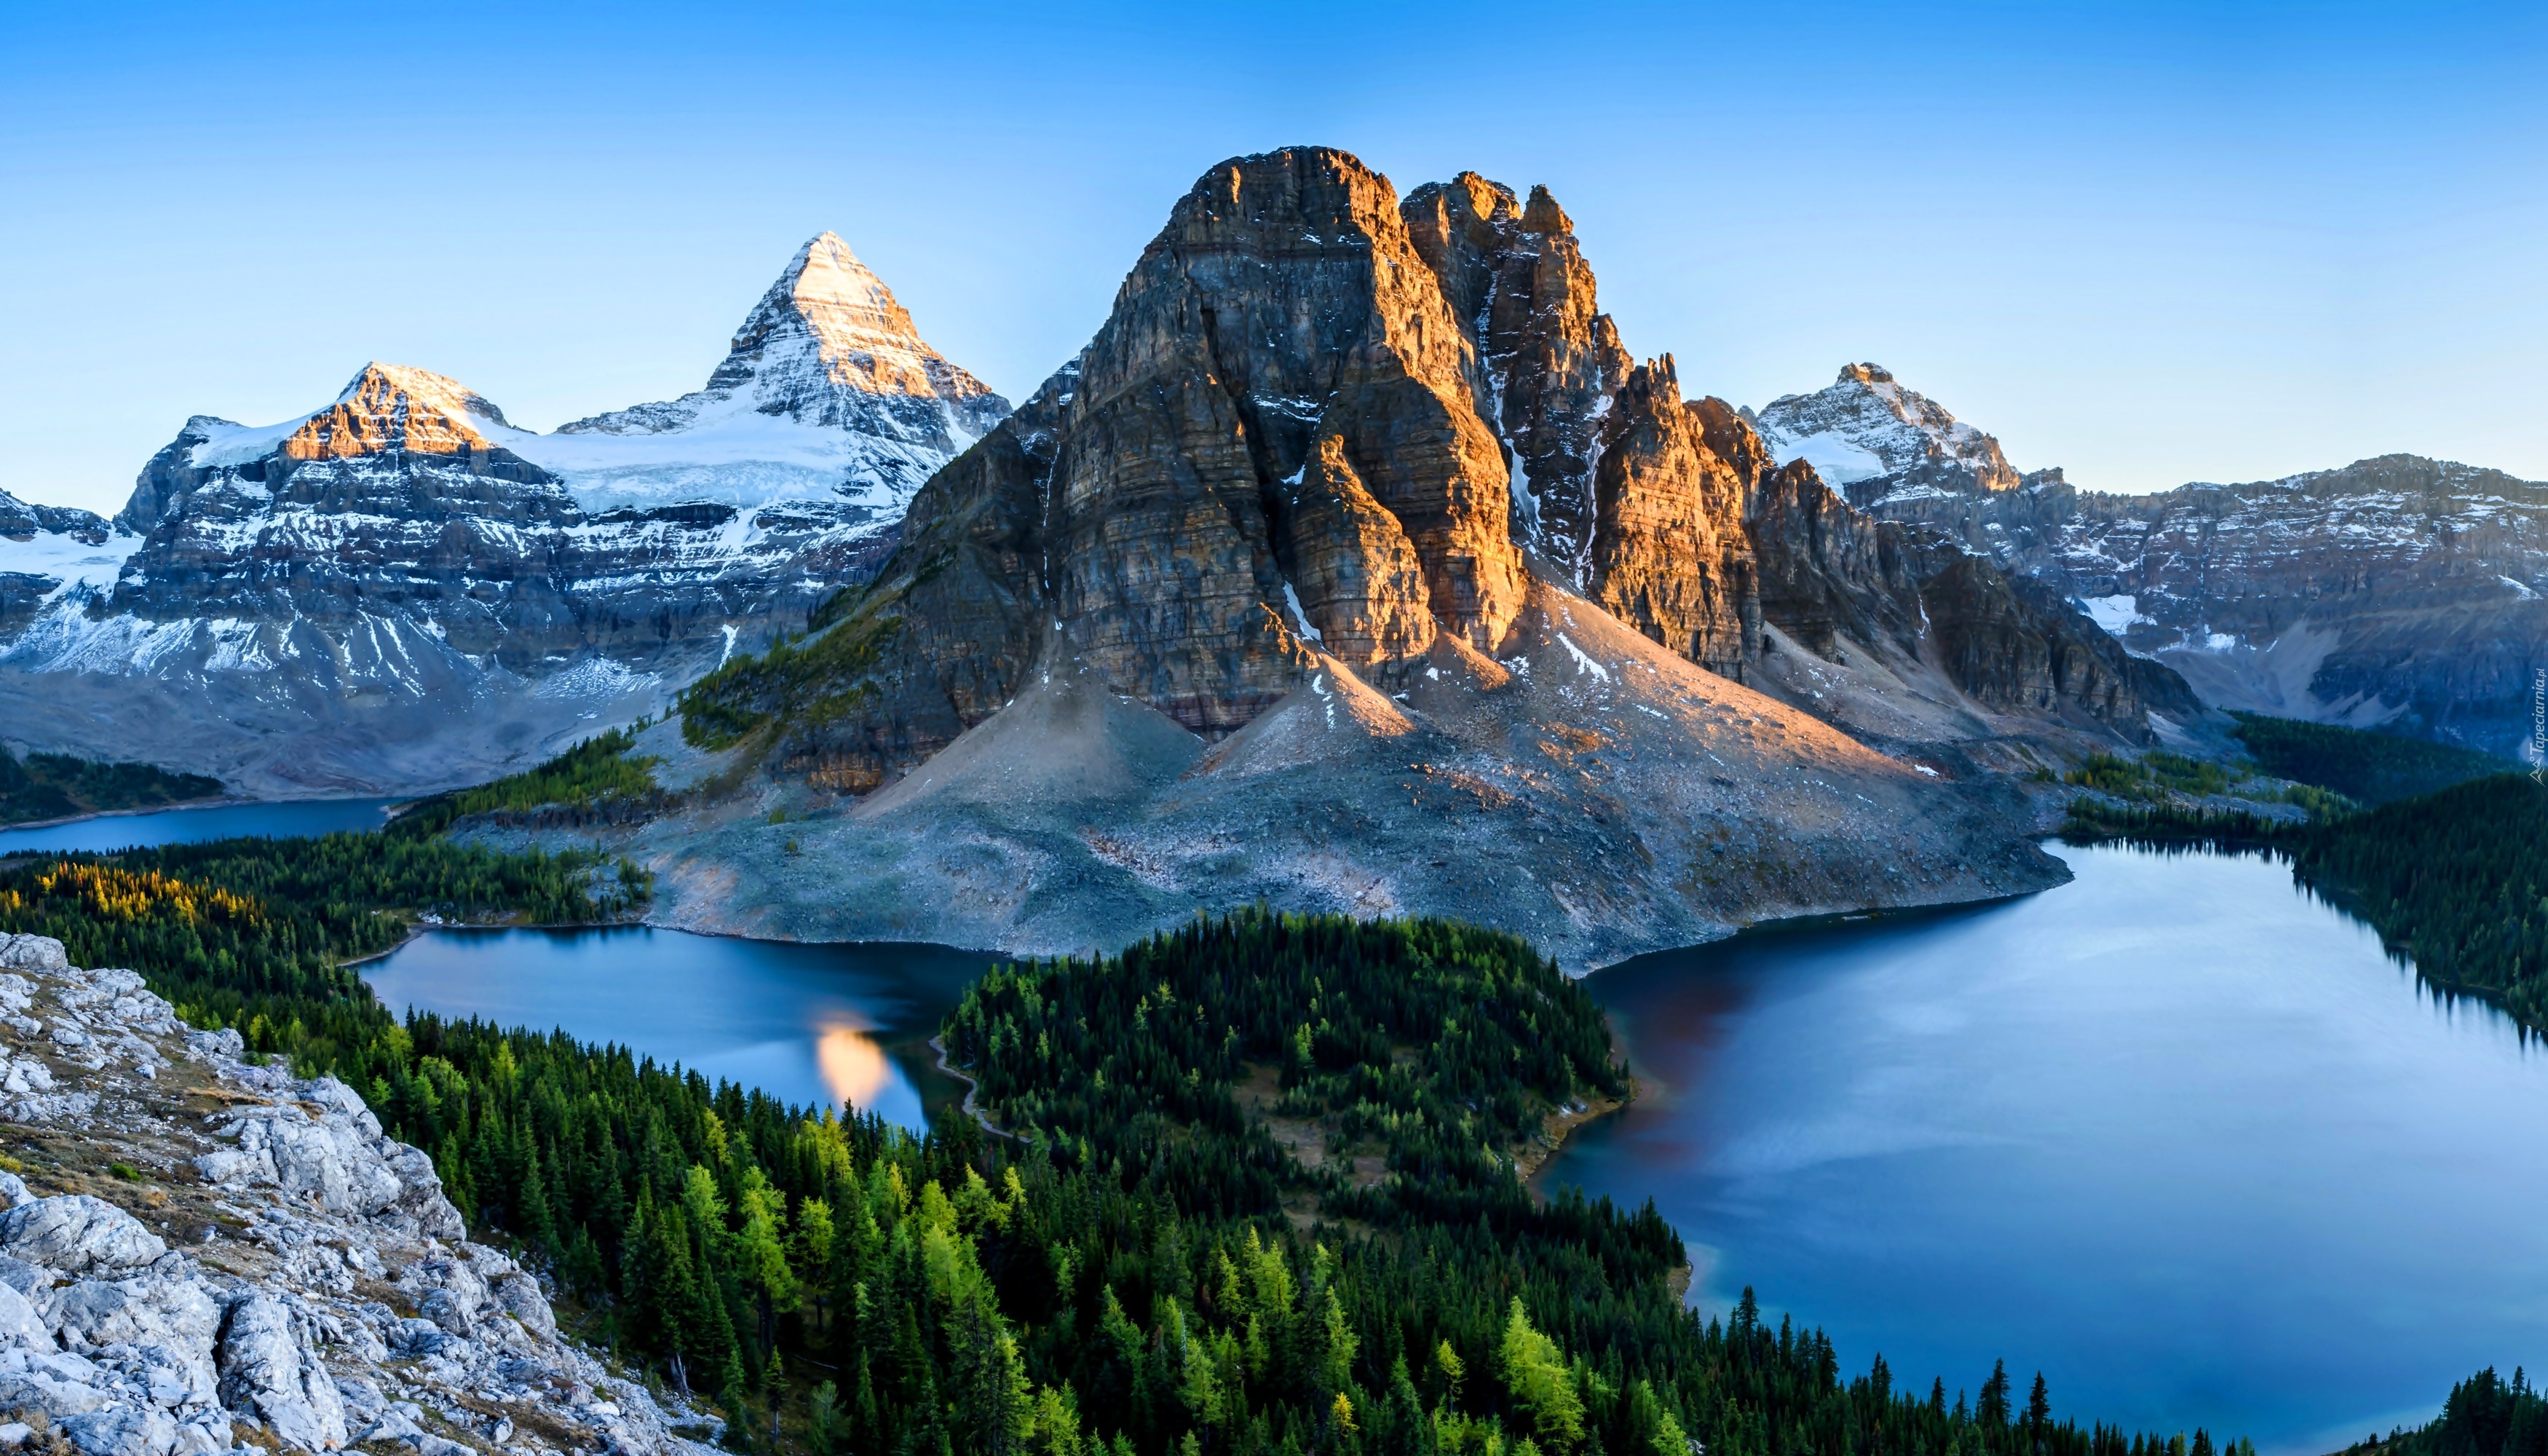 Kanada, Prowincja Kolumbia Brytyjska, Park prowincjonalny Mount Assiniboine Provincial Park, Góra Mount Assiniboine